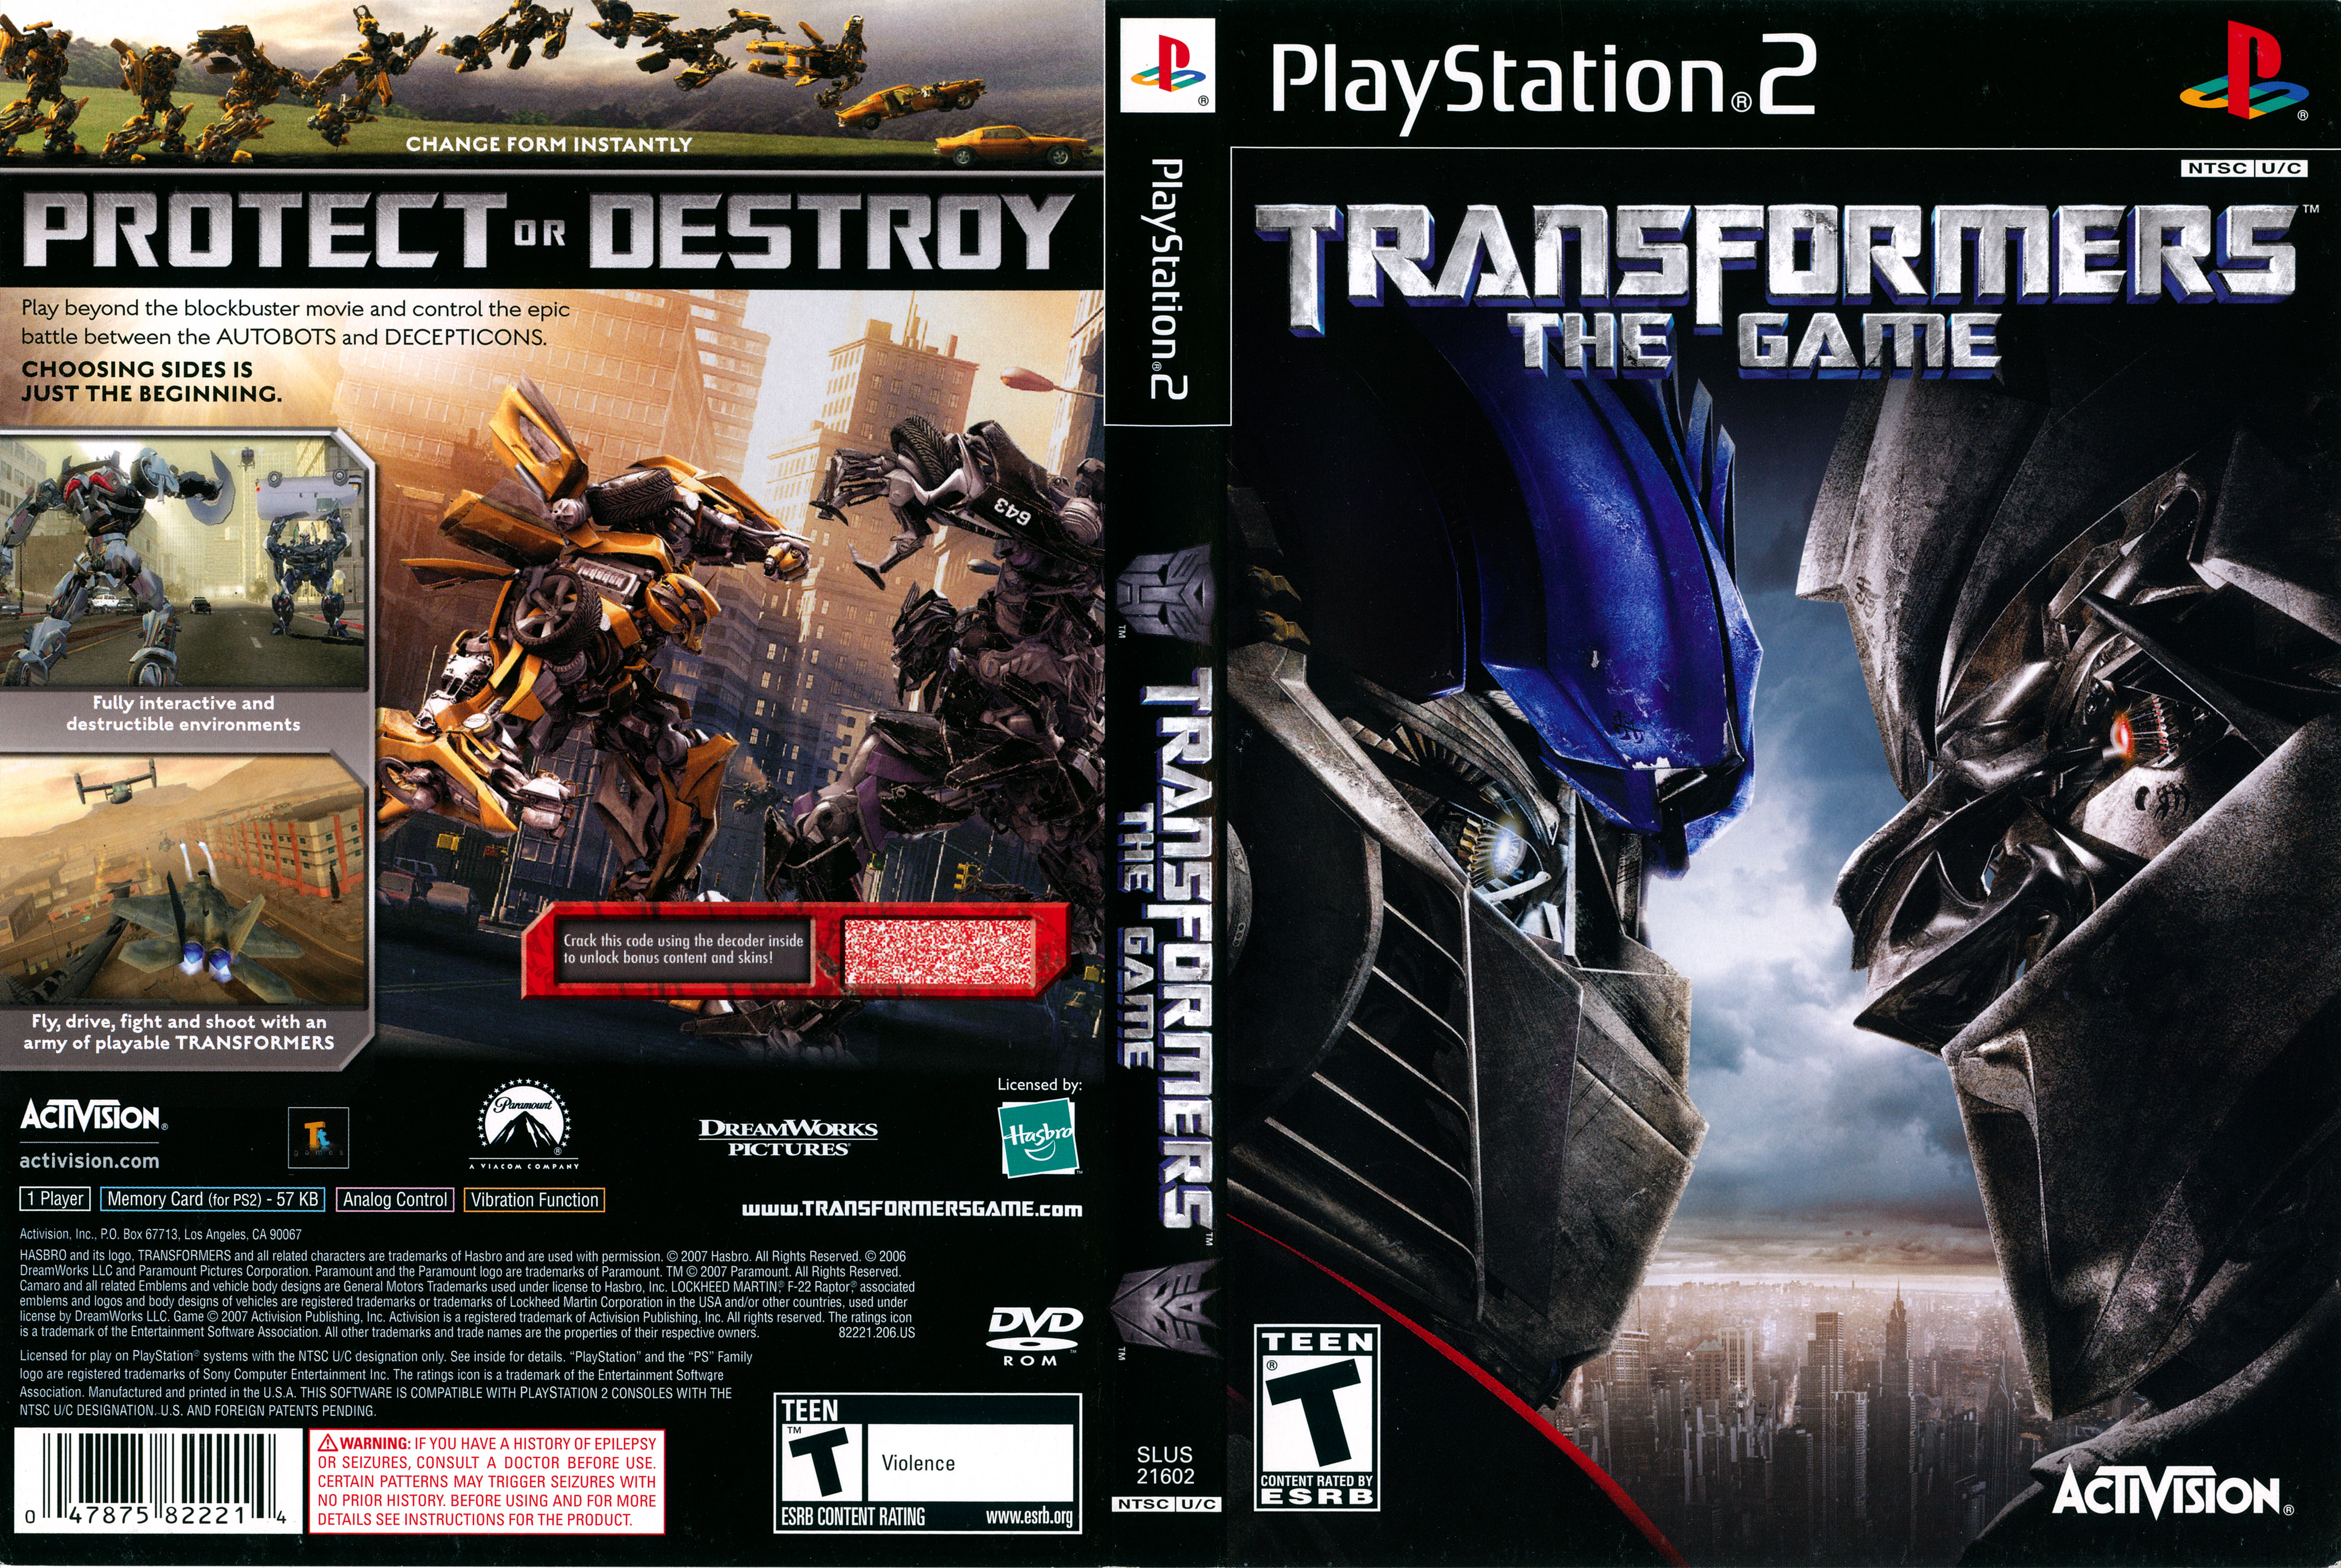 Ps2 игры пк. Трансформеры 2 игра ps2. Трансформеры Revenge of the Fallen на PS 2. Игра трансформеры на ПС 2. Трансформеры / Transformers: the game ps3.